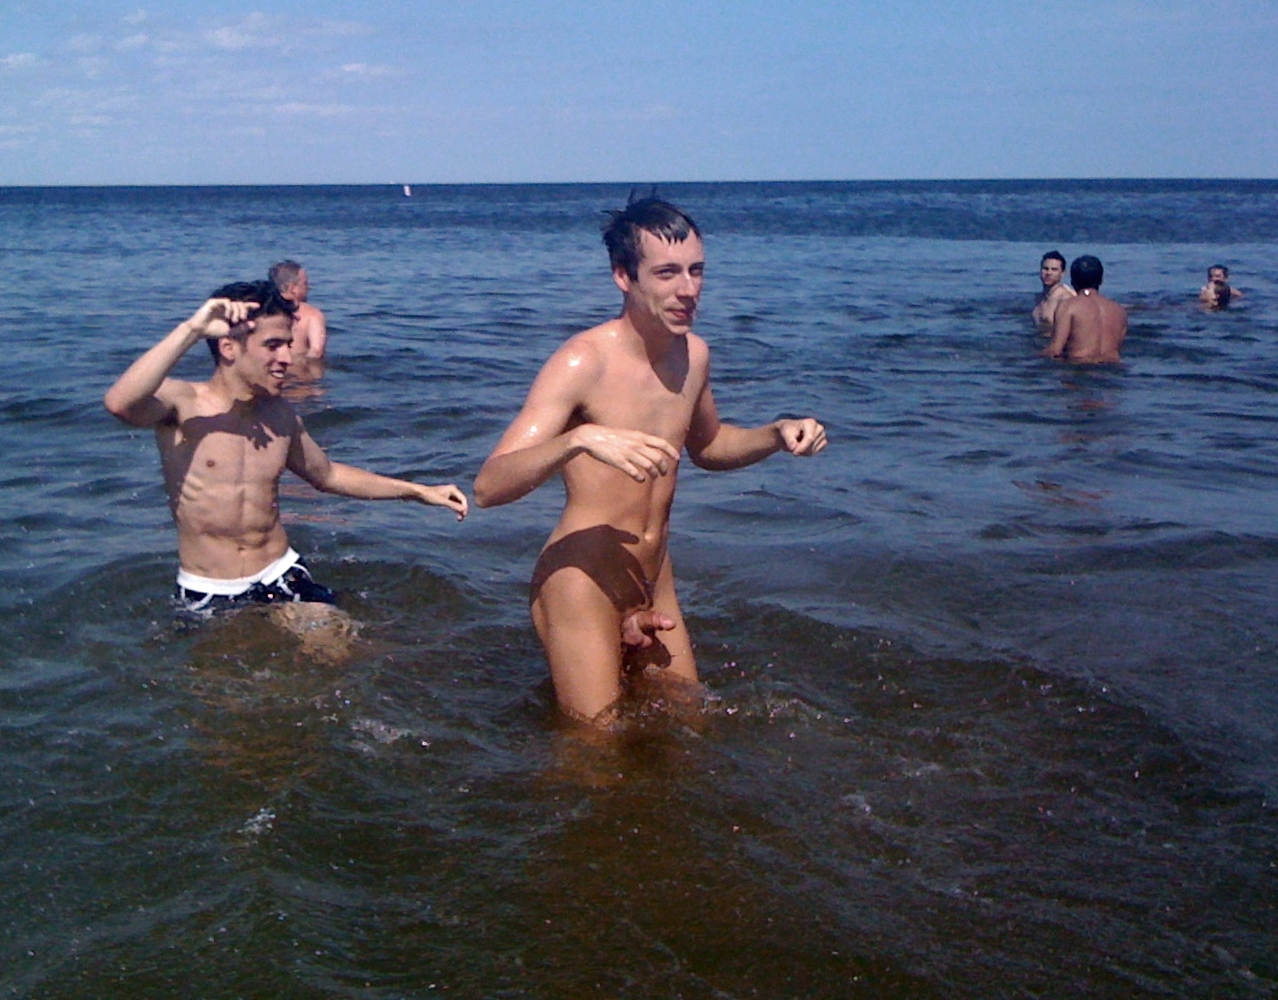 cfnm boner nude beach erection naked photo